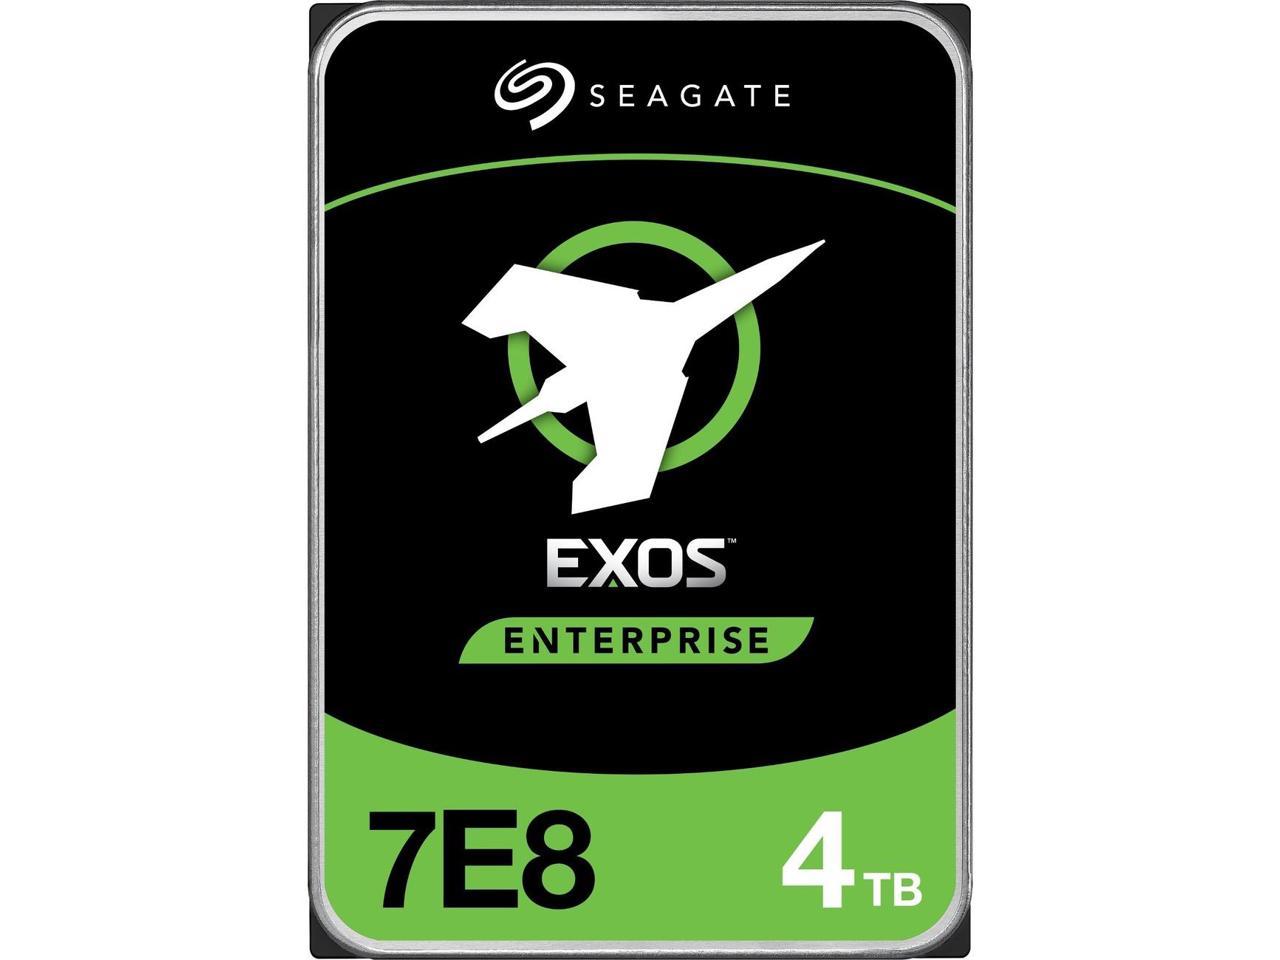 Seagate Exos 7E8 ST4000NM003A 4 TB Hard Drive - SAS (12Gb/s SAS) - 3.5" Drive - Internal